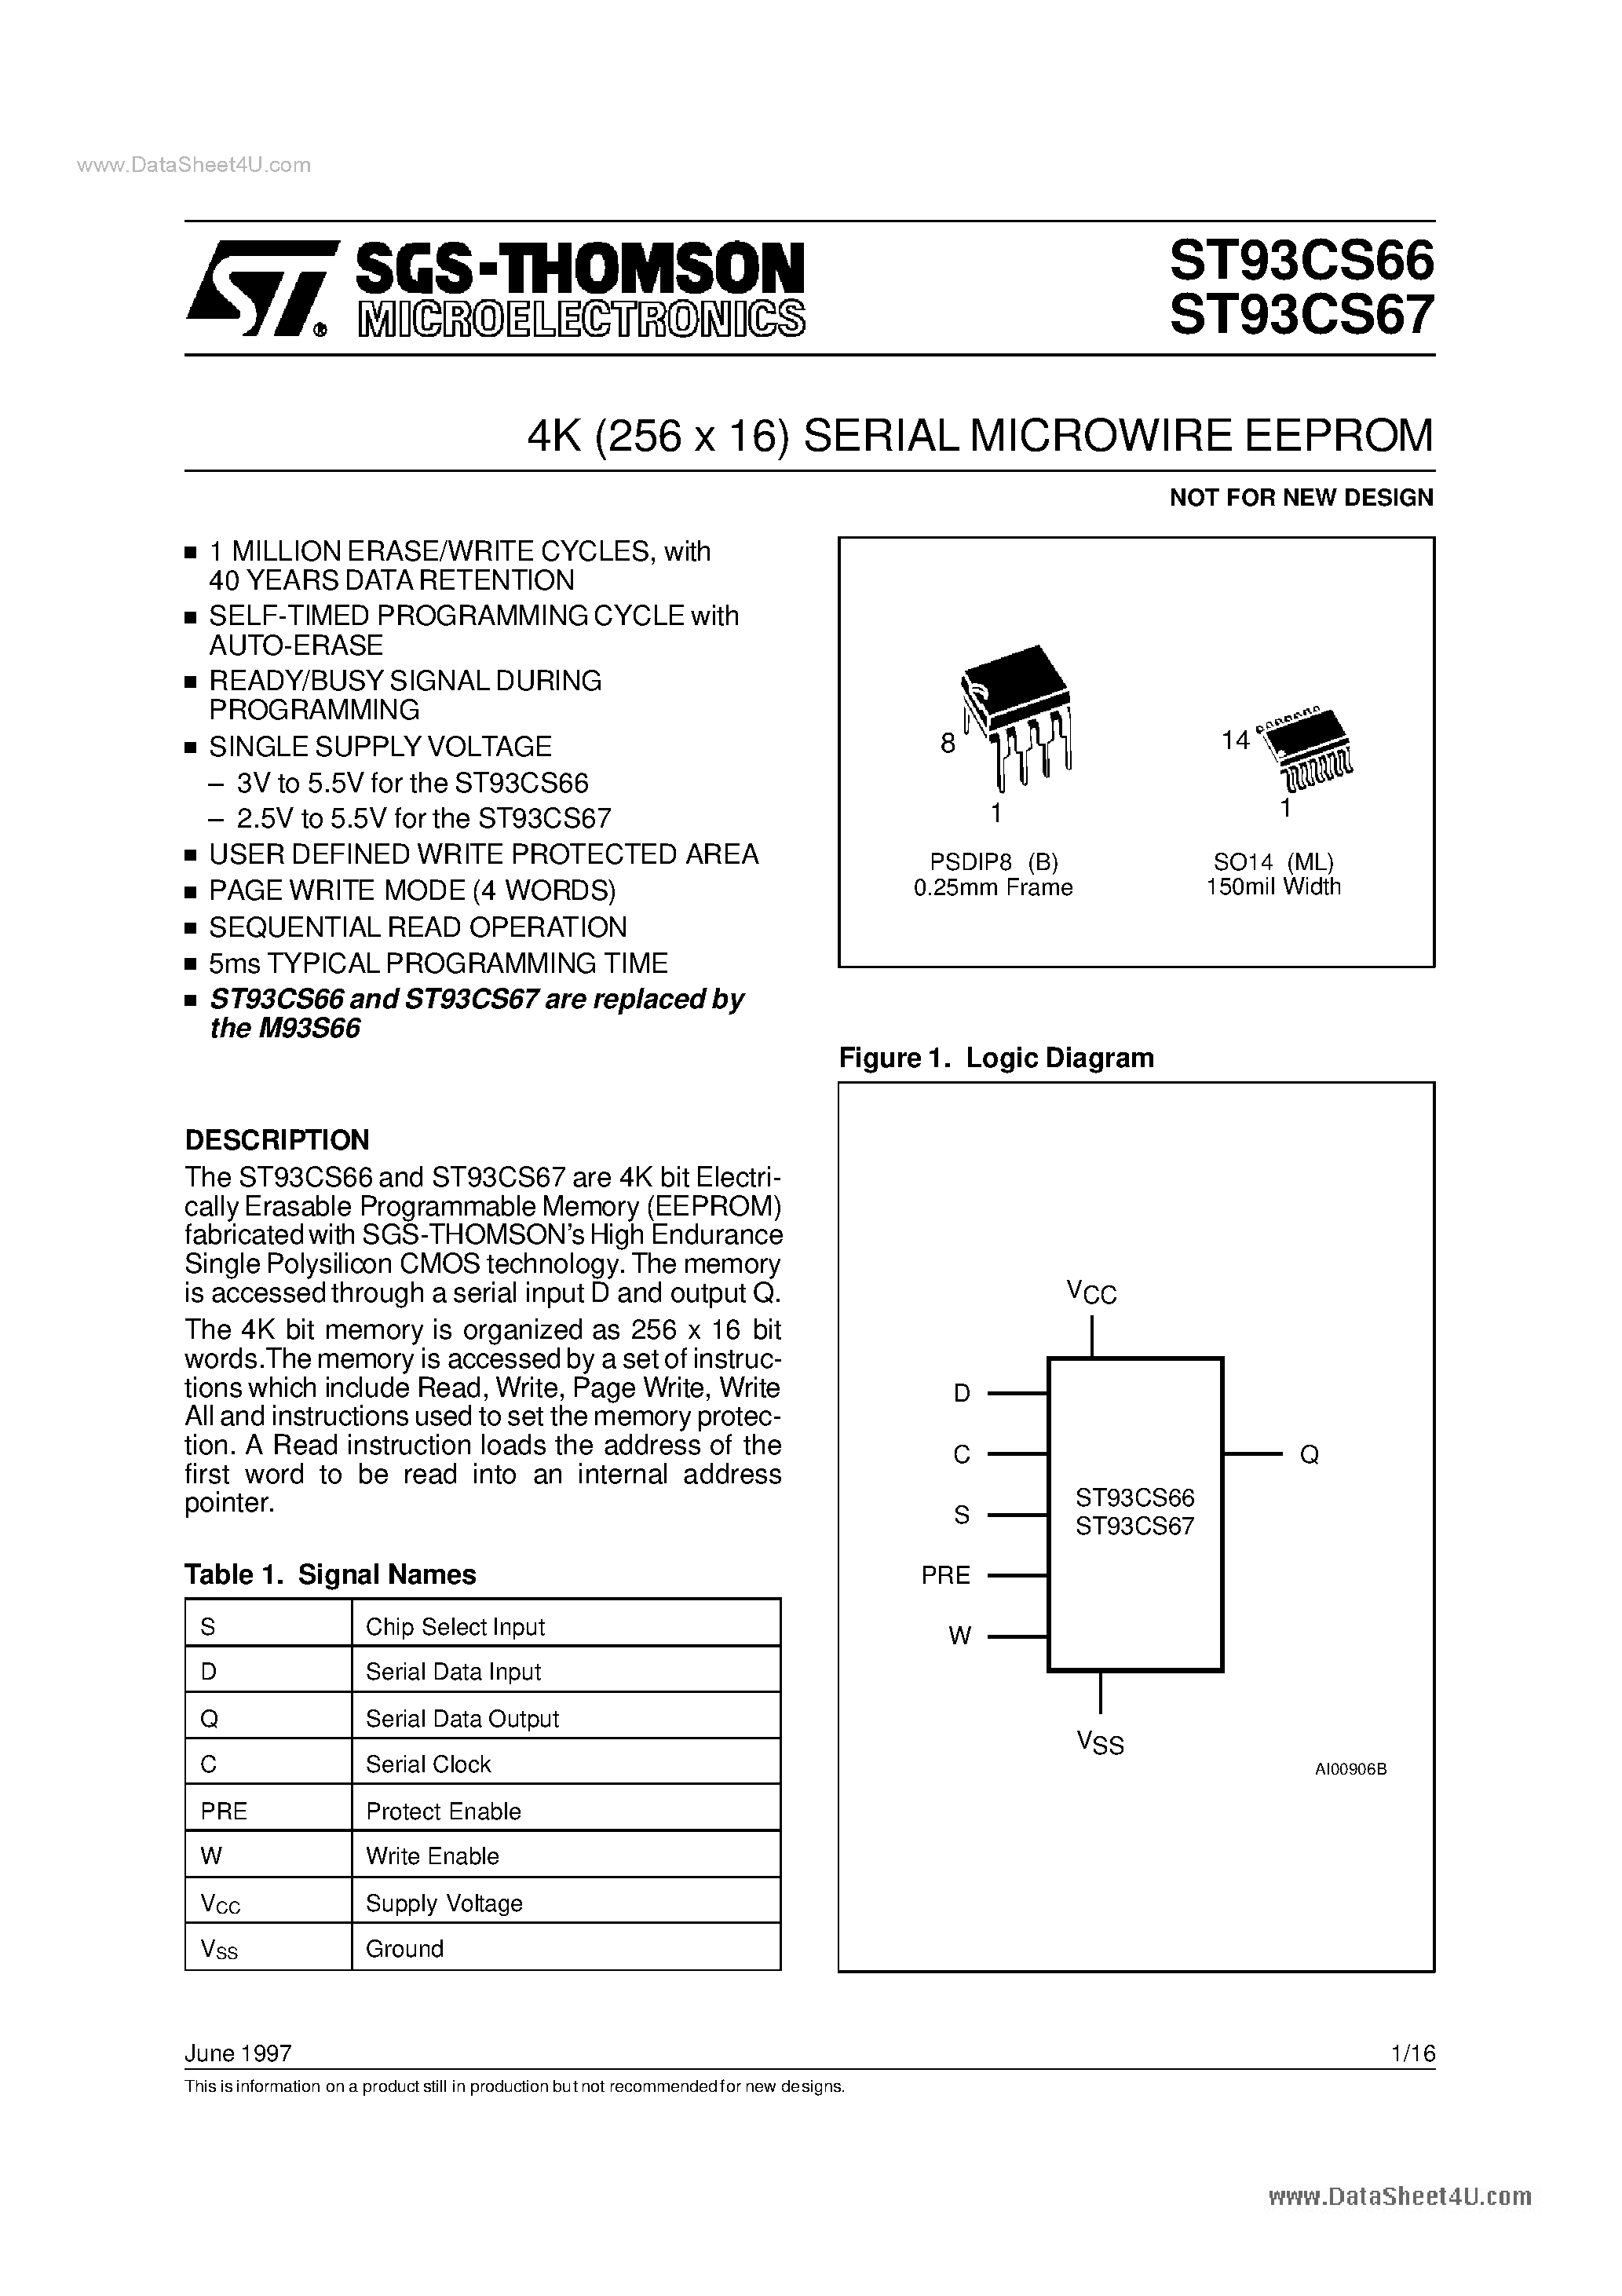 Даташит ST93CS66 - (ST93CS66 / ST93CS67) 4K 256 x 16 SERIAL MICROWIRE EEPROM страница 1